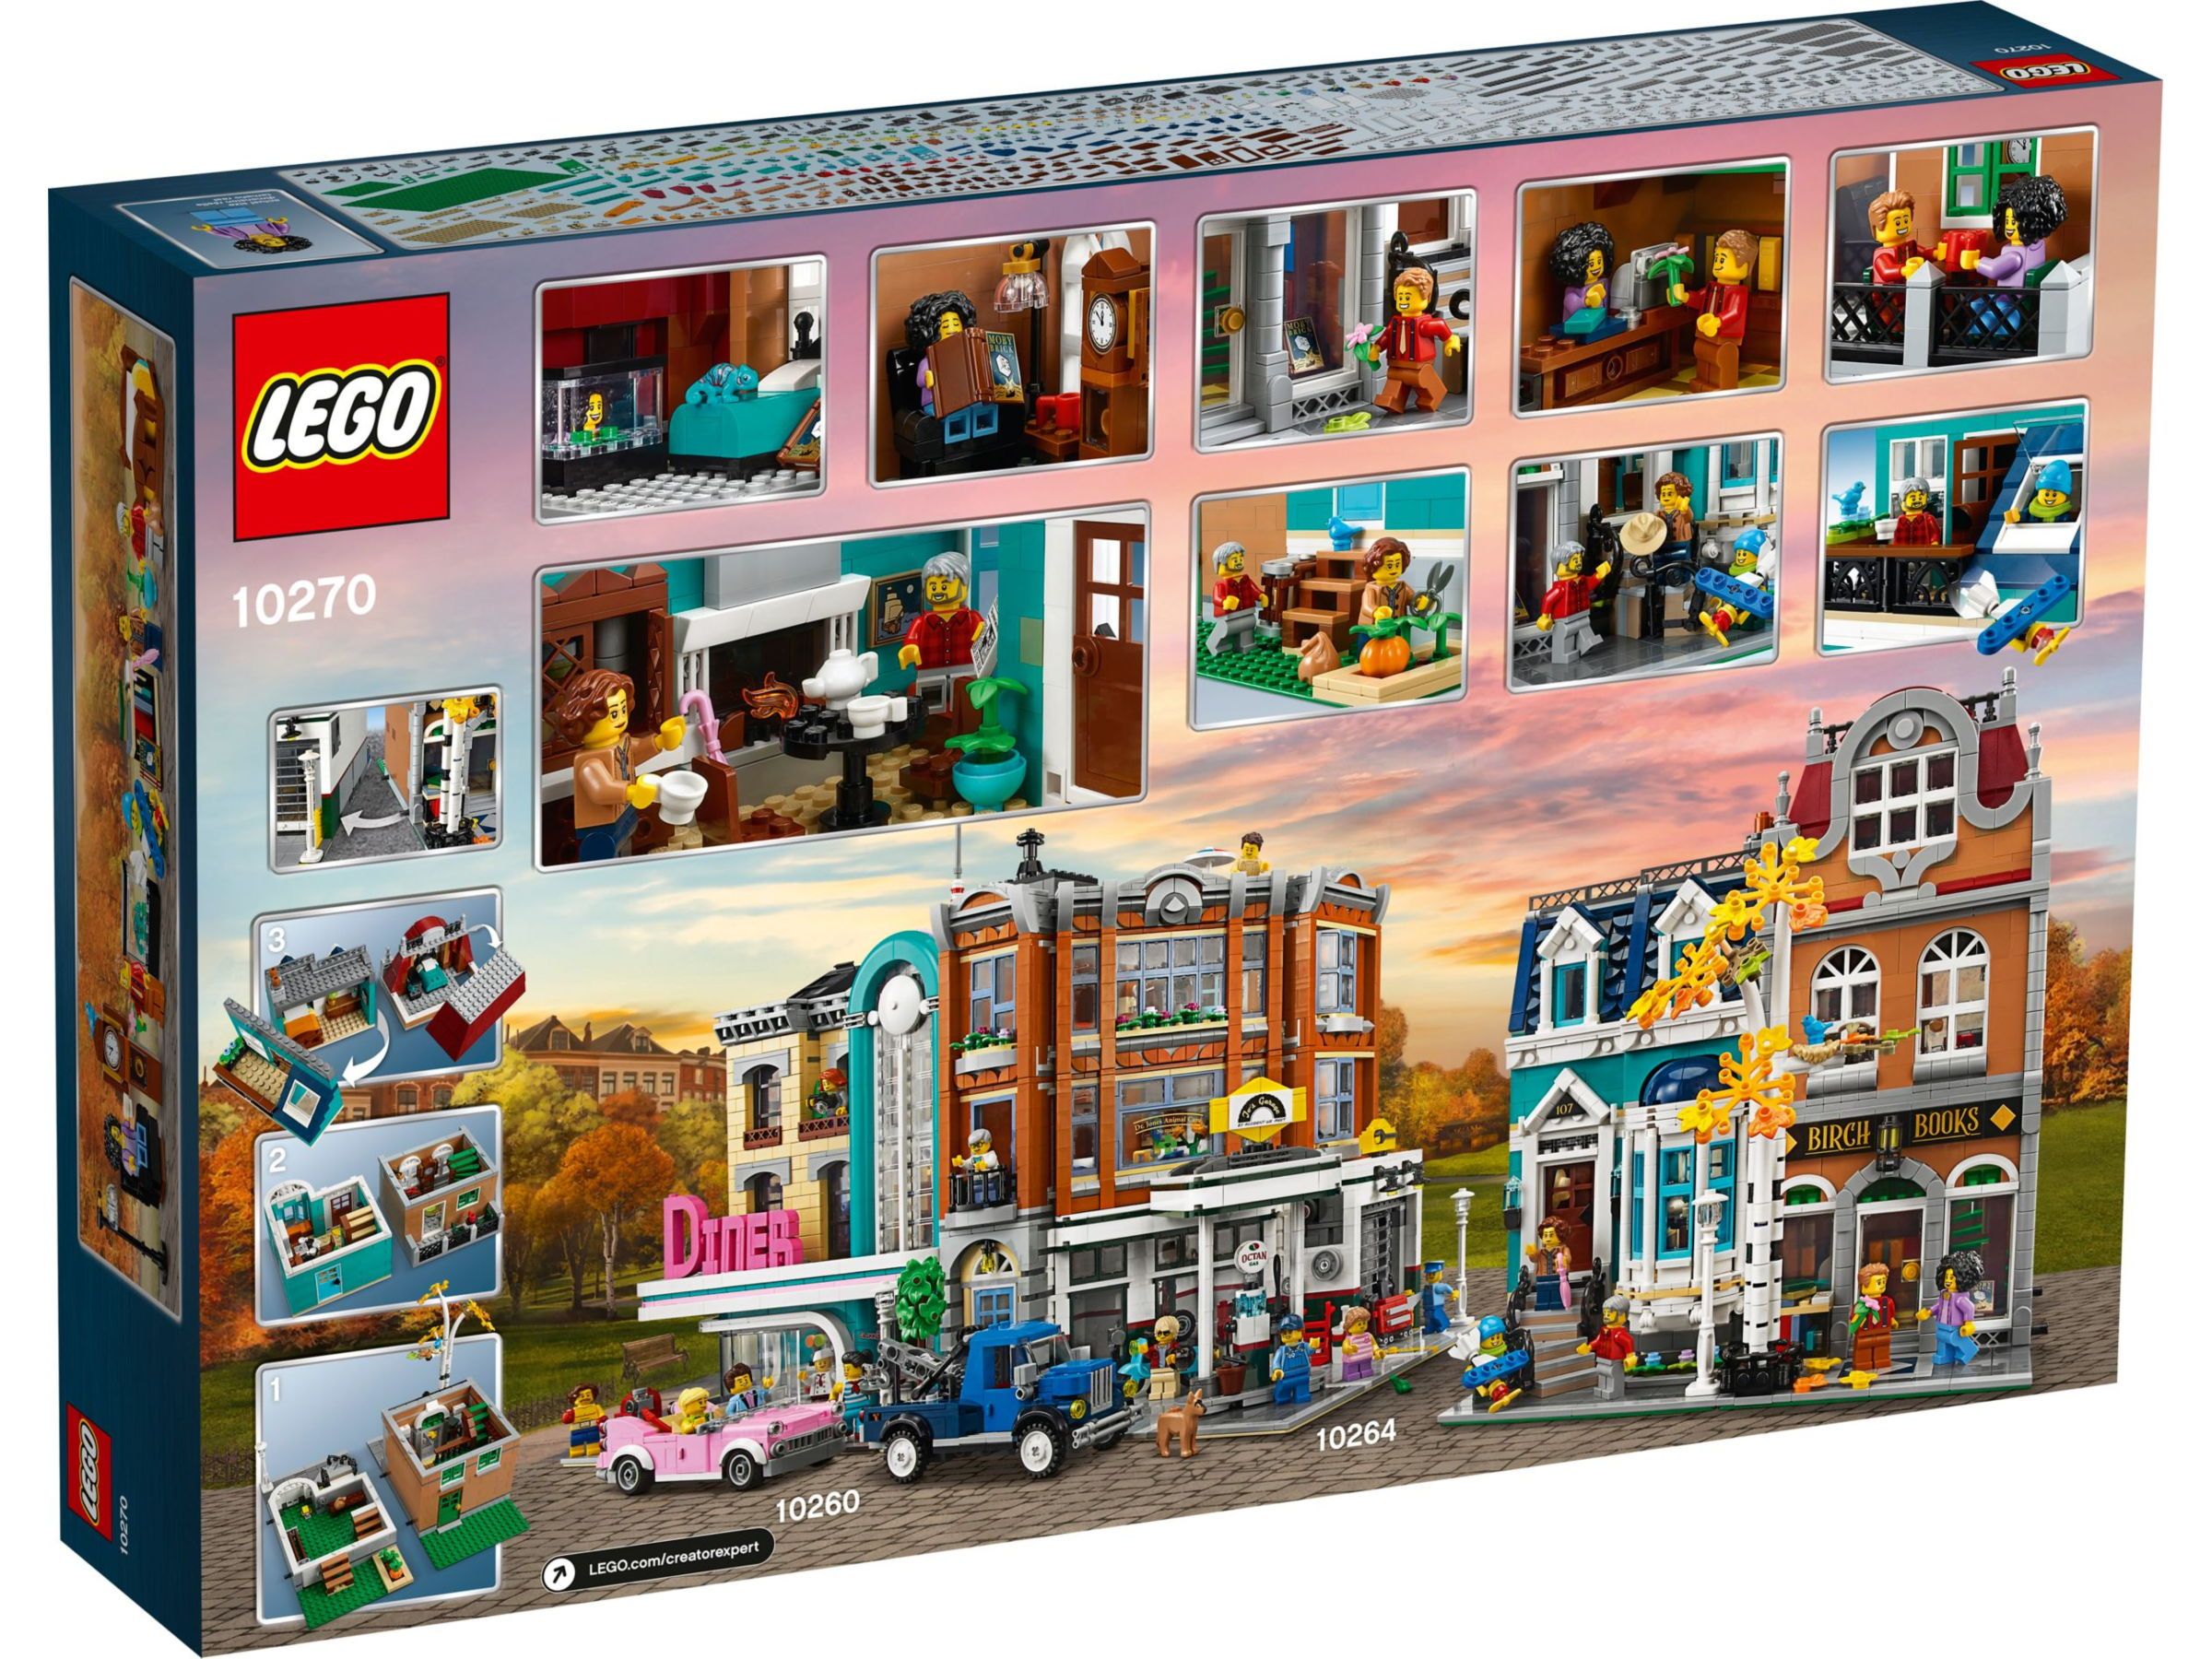 LEGO 10270 Creator Expert  Boekenwinkel